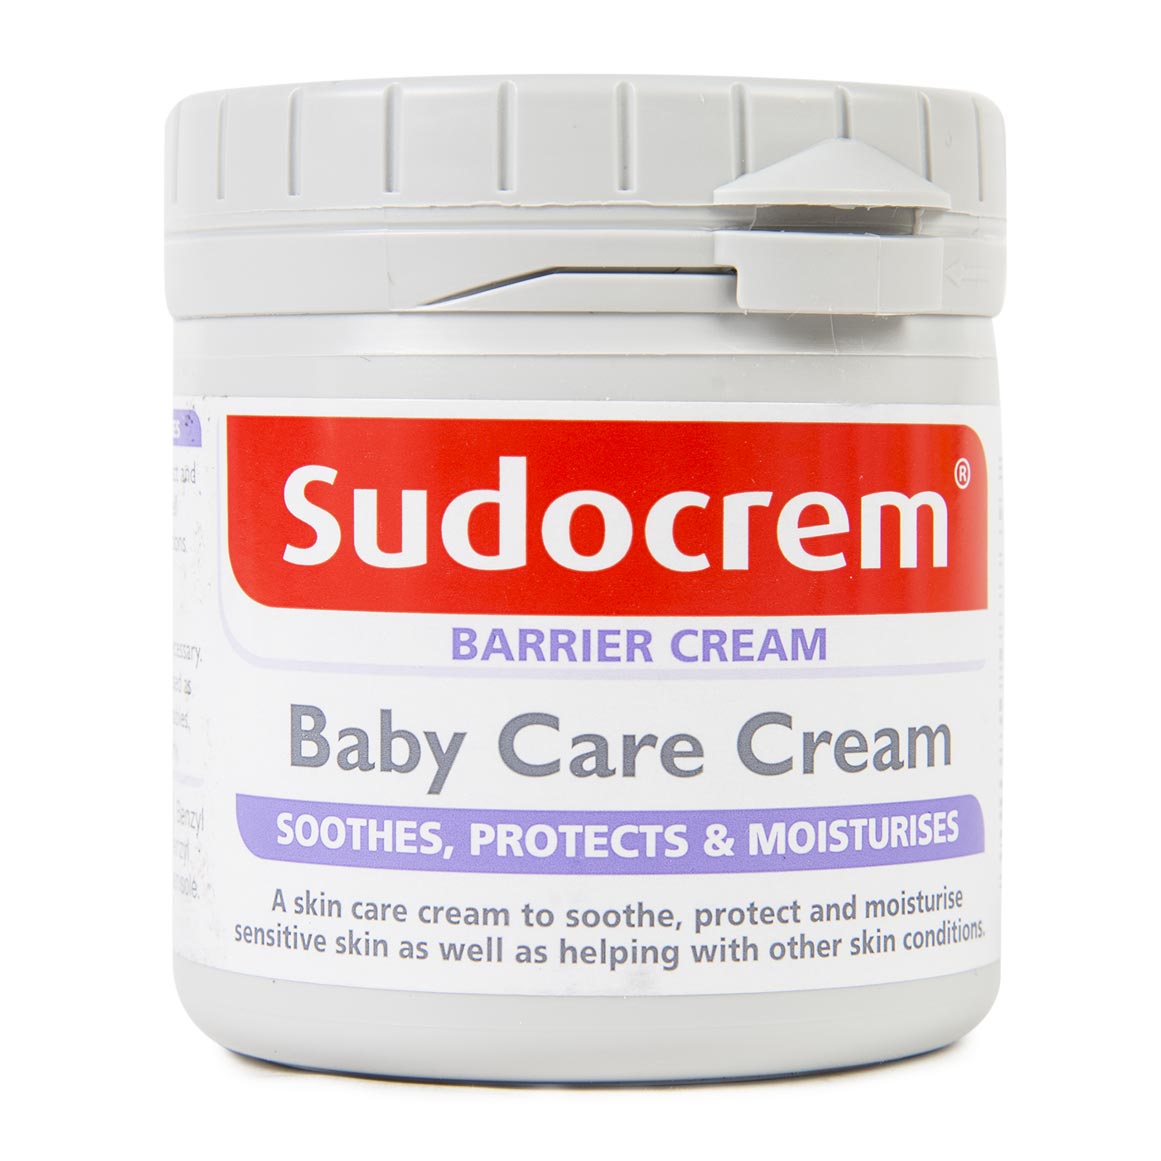 Sudocrem Baby Care Barrier Cream